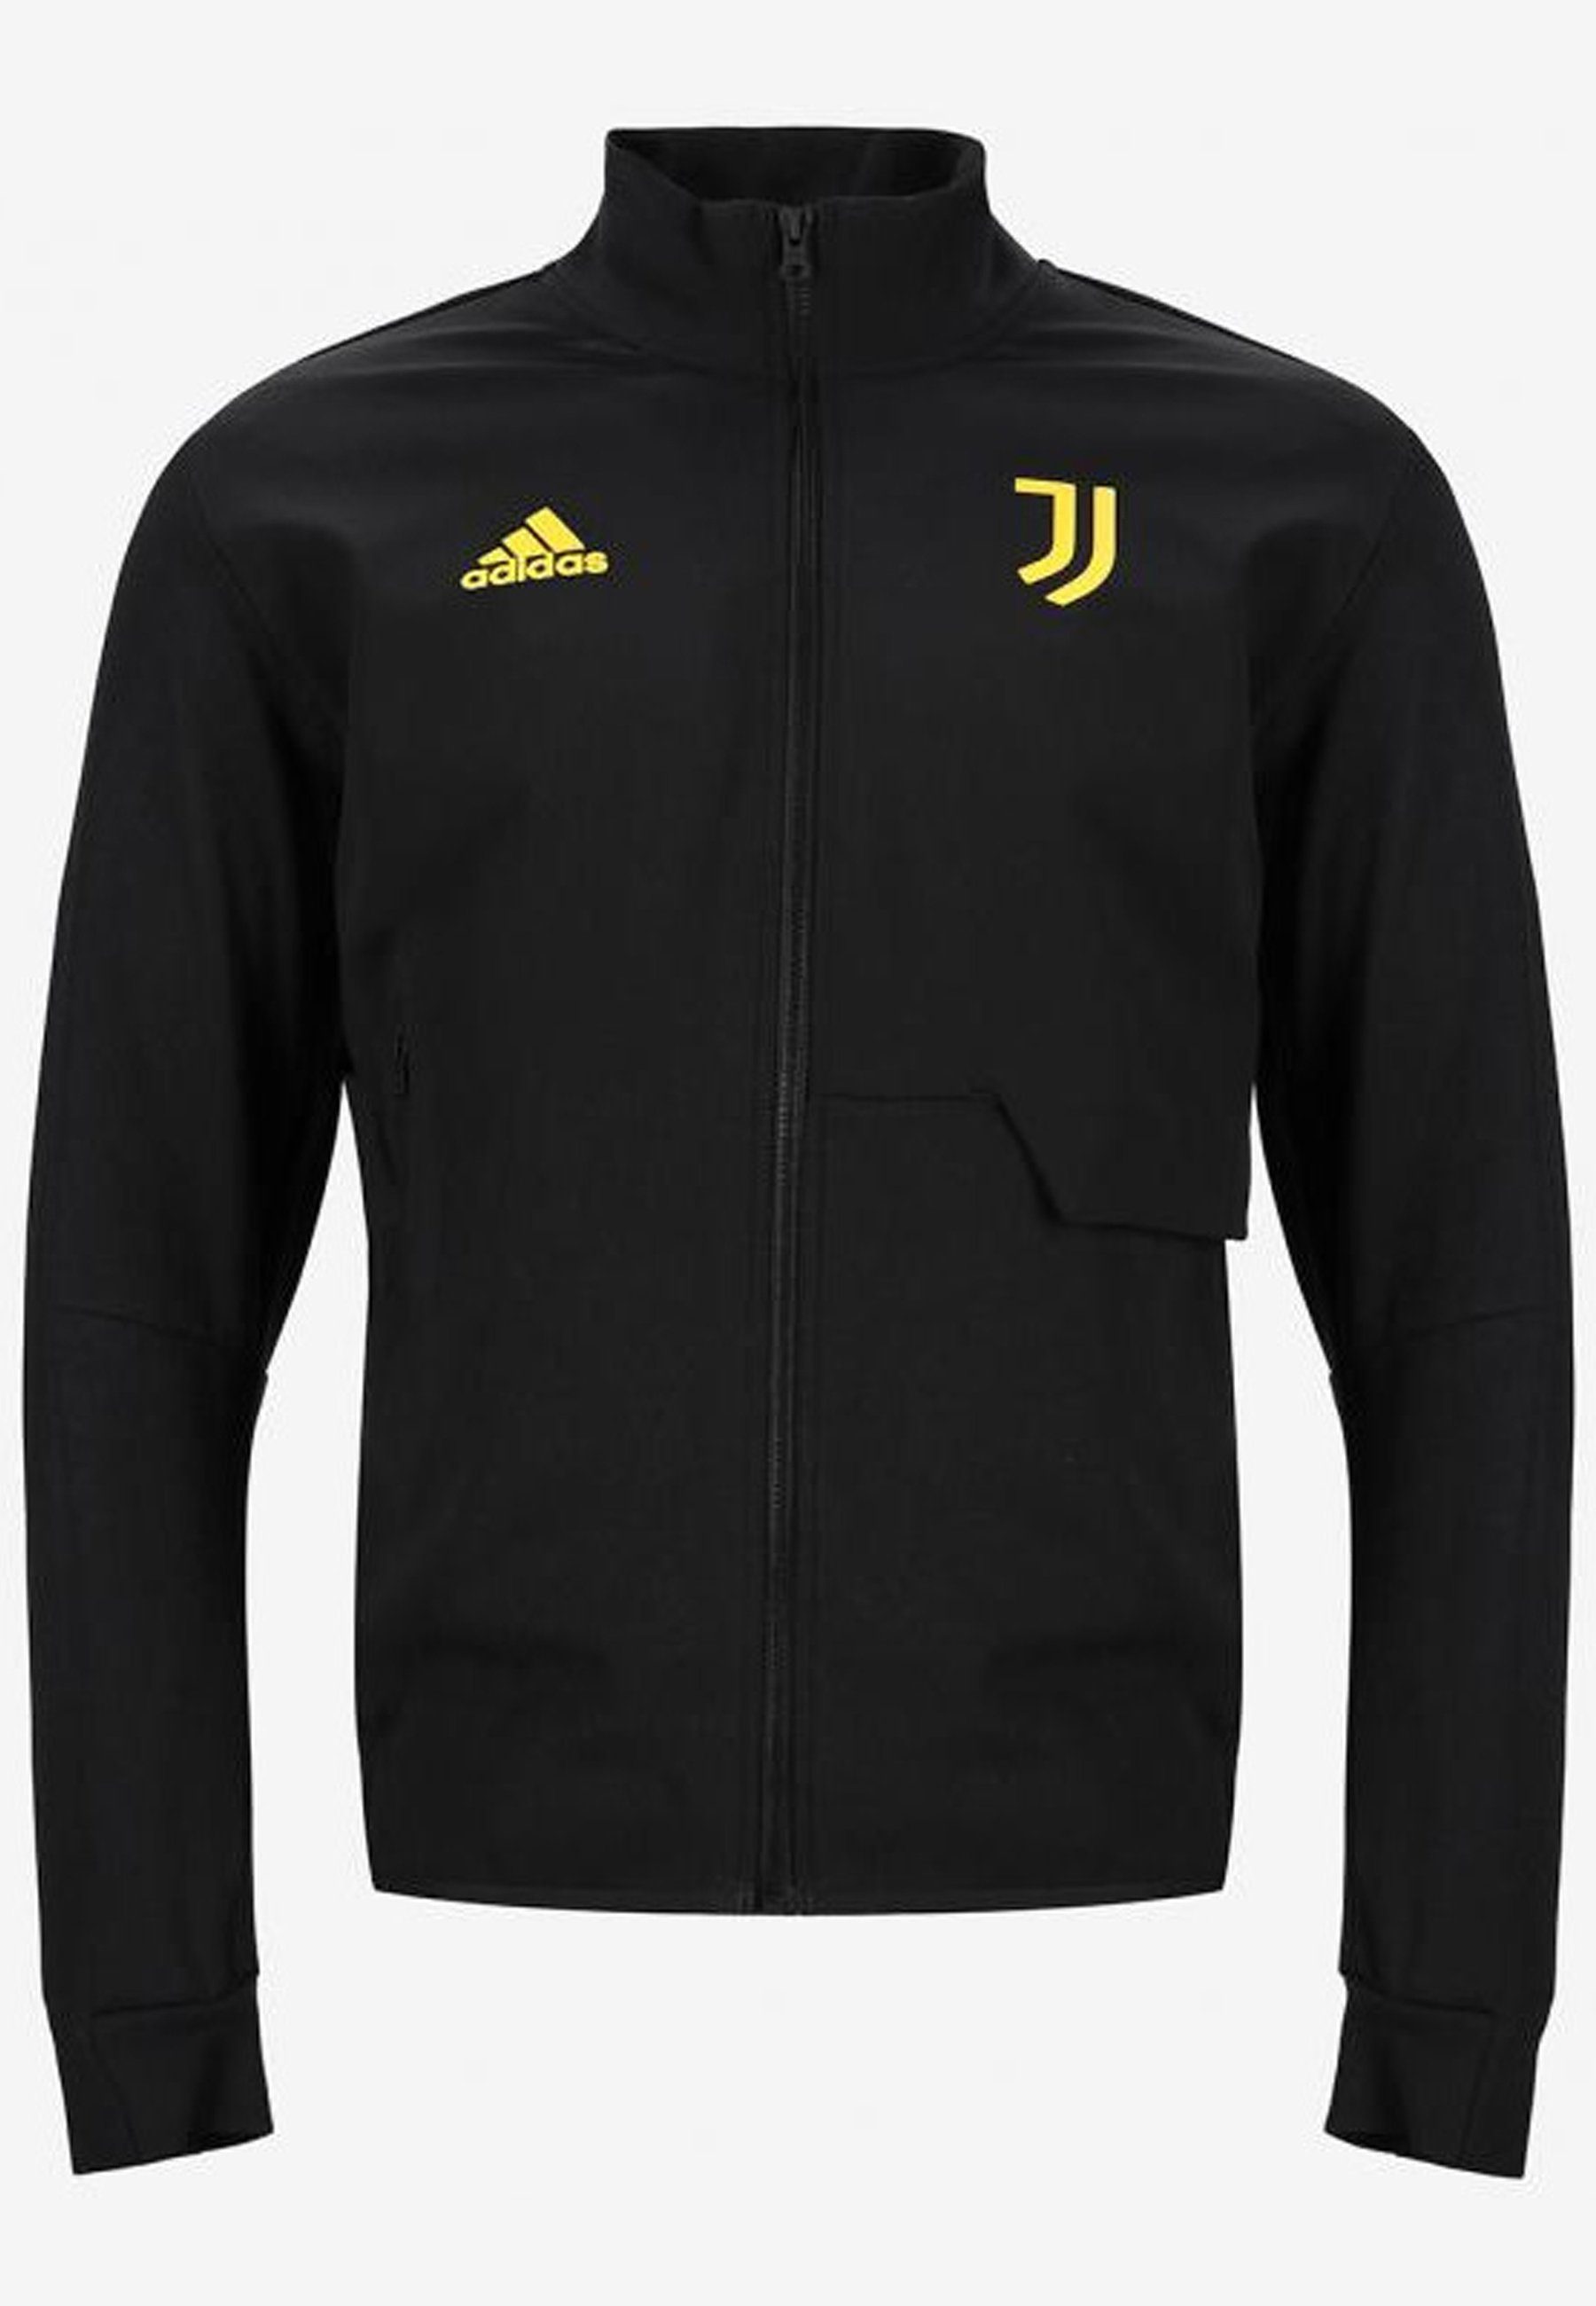 Trainingsjacke Juve schwarz Originals adidas